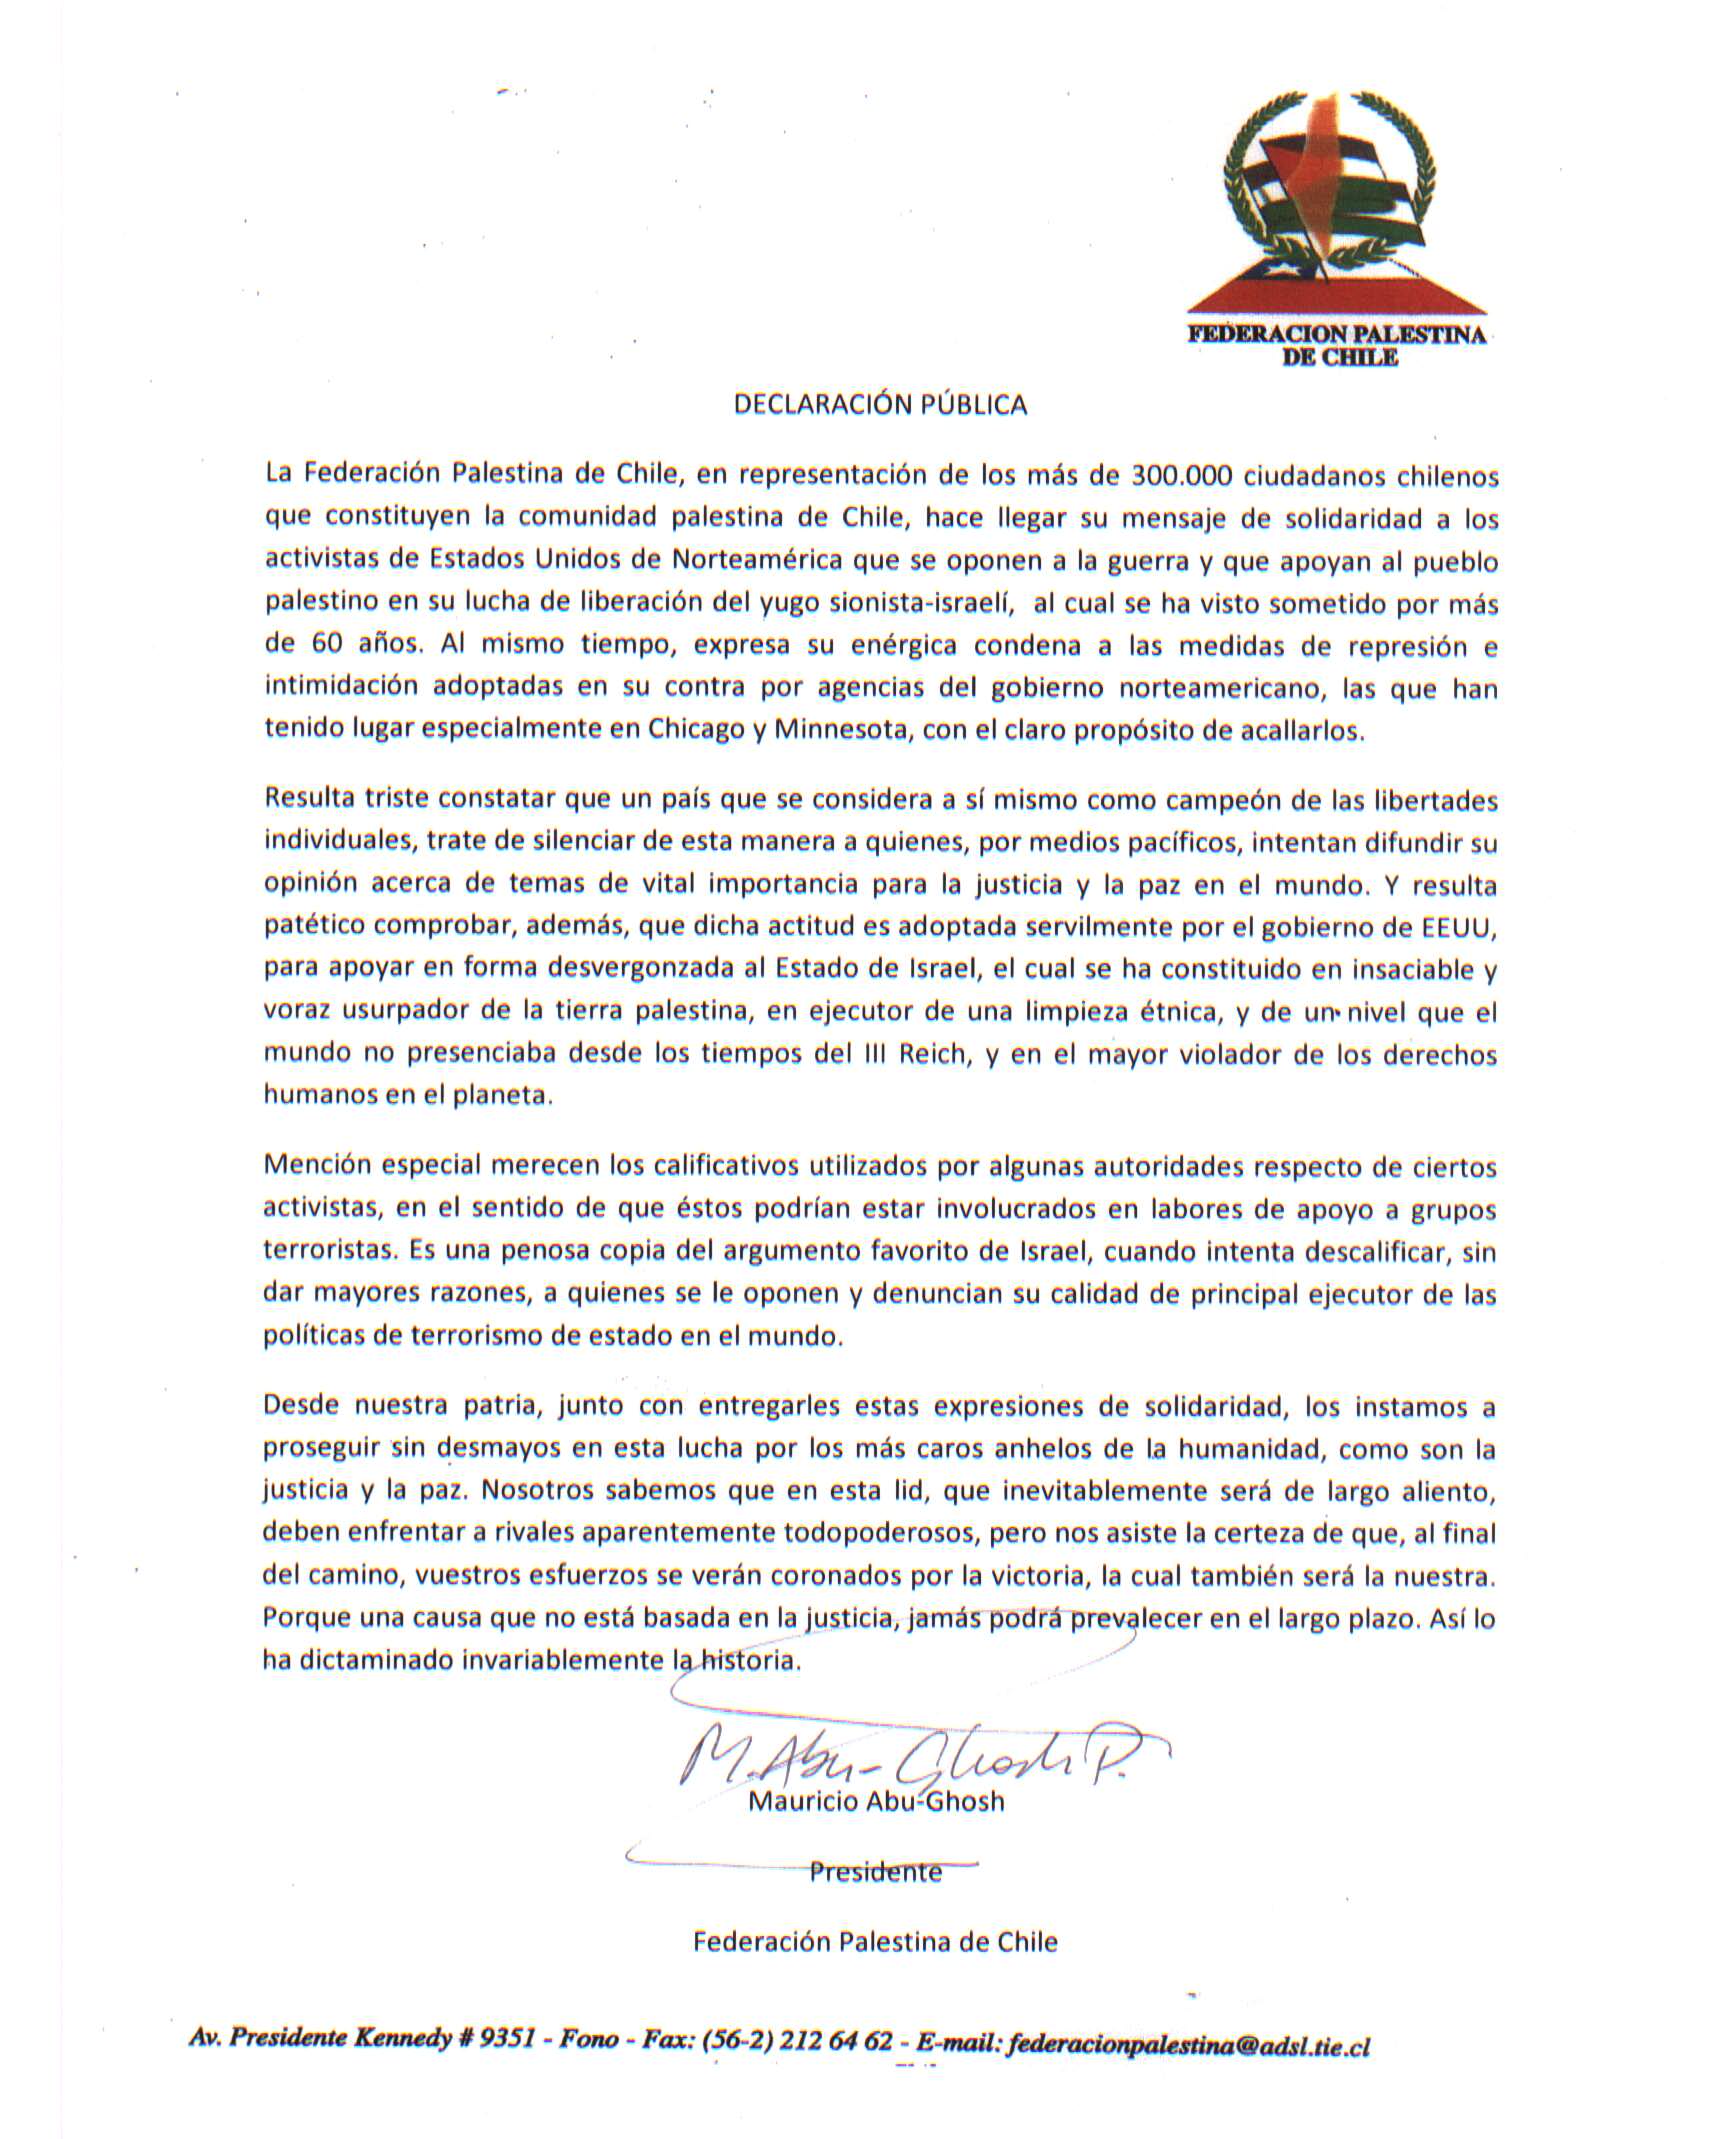 Text of original spanish declaration